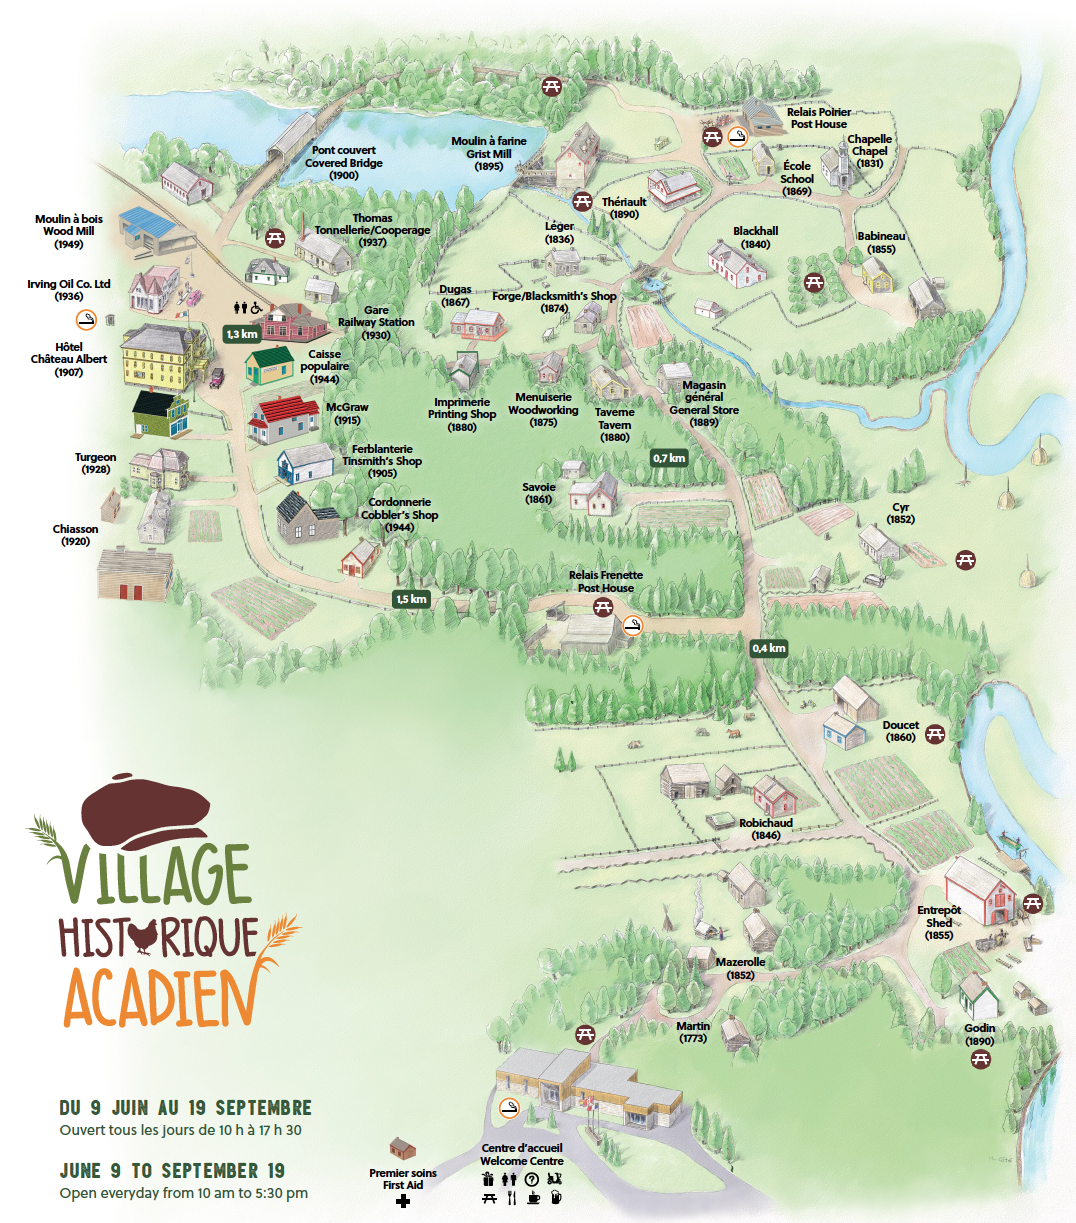 Village historique acadien Map